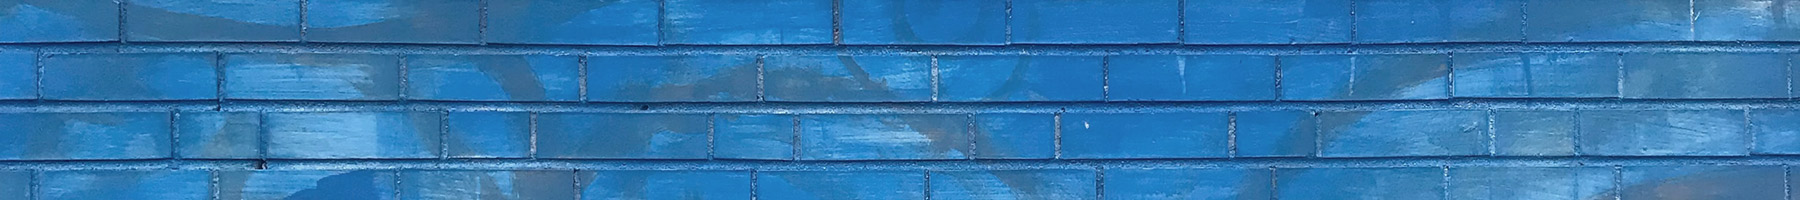 blue painted brick wall